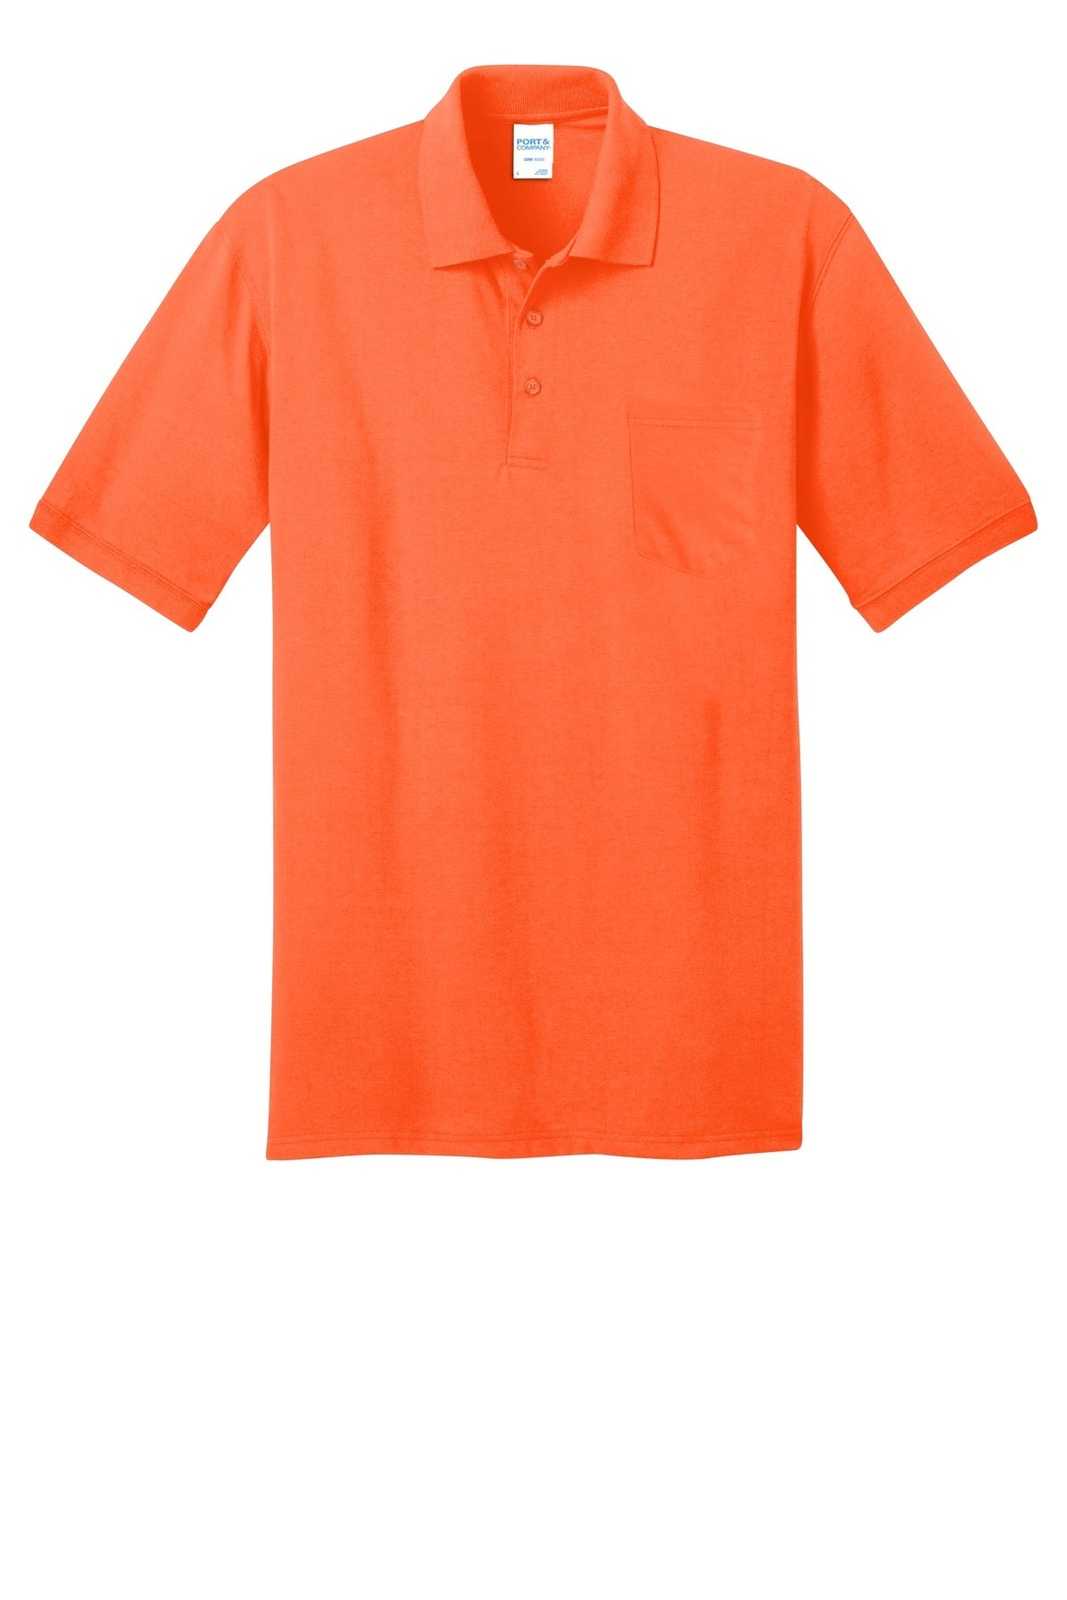 Port &amp; Company KP55P Core Blend Jersey Knit Pocket Polo - Safety Orange - HIT a Double - 5